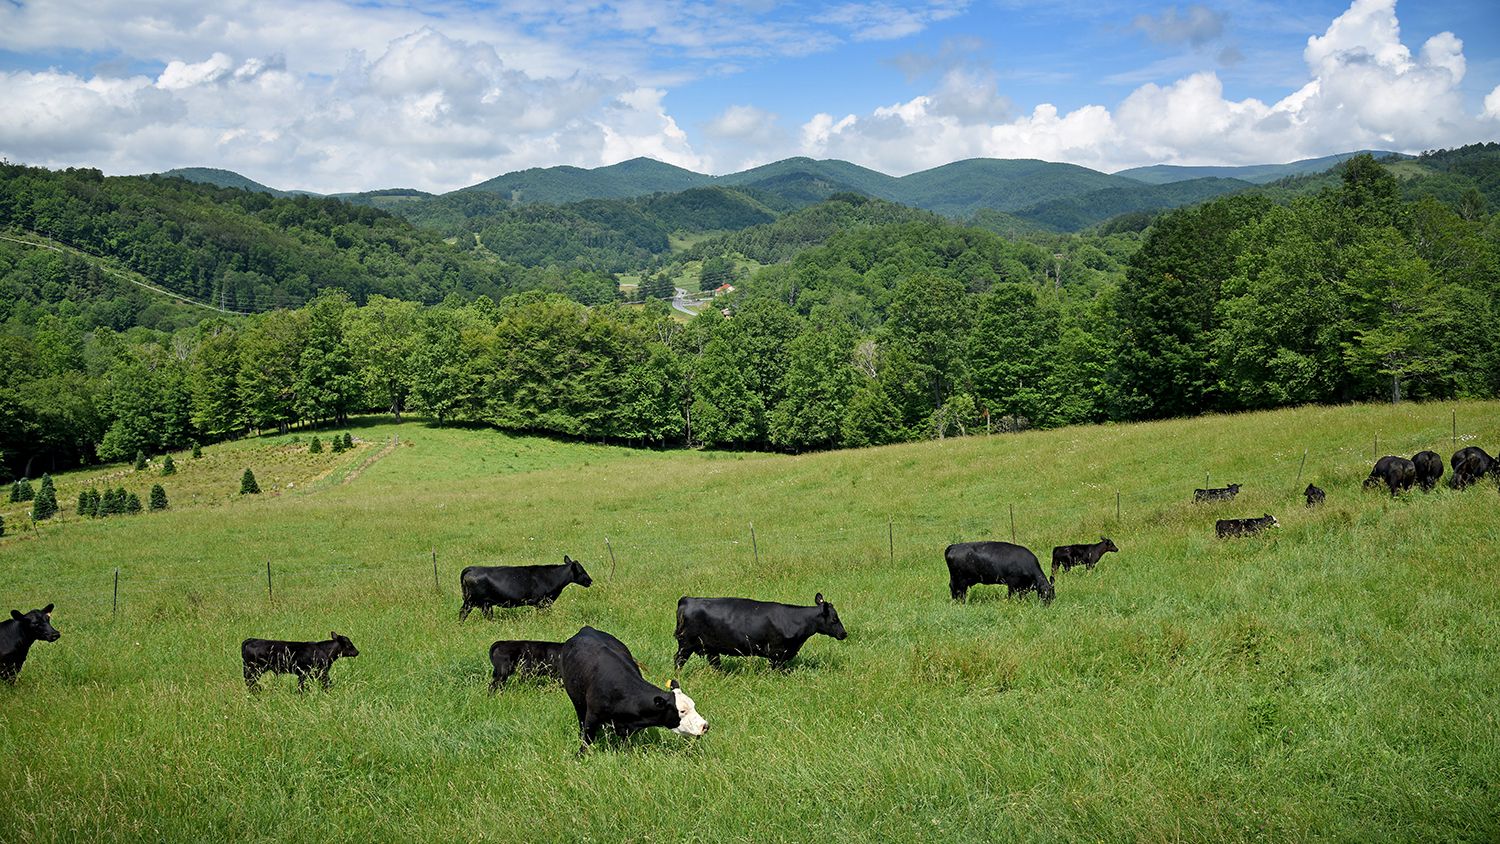 Grazing cattle on a mountain farm